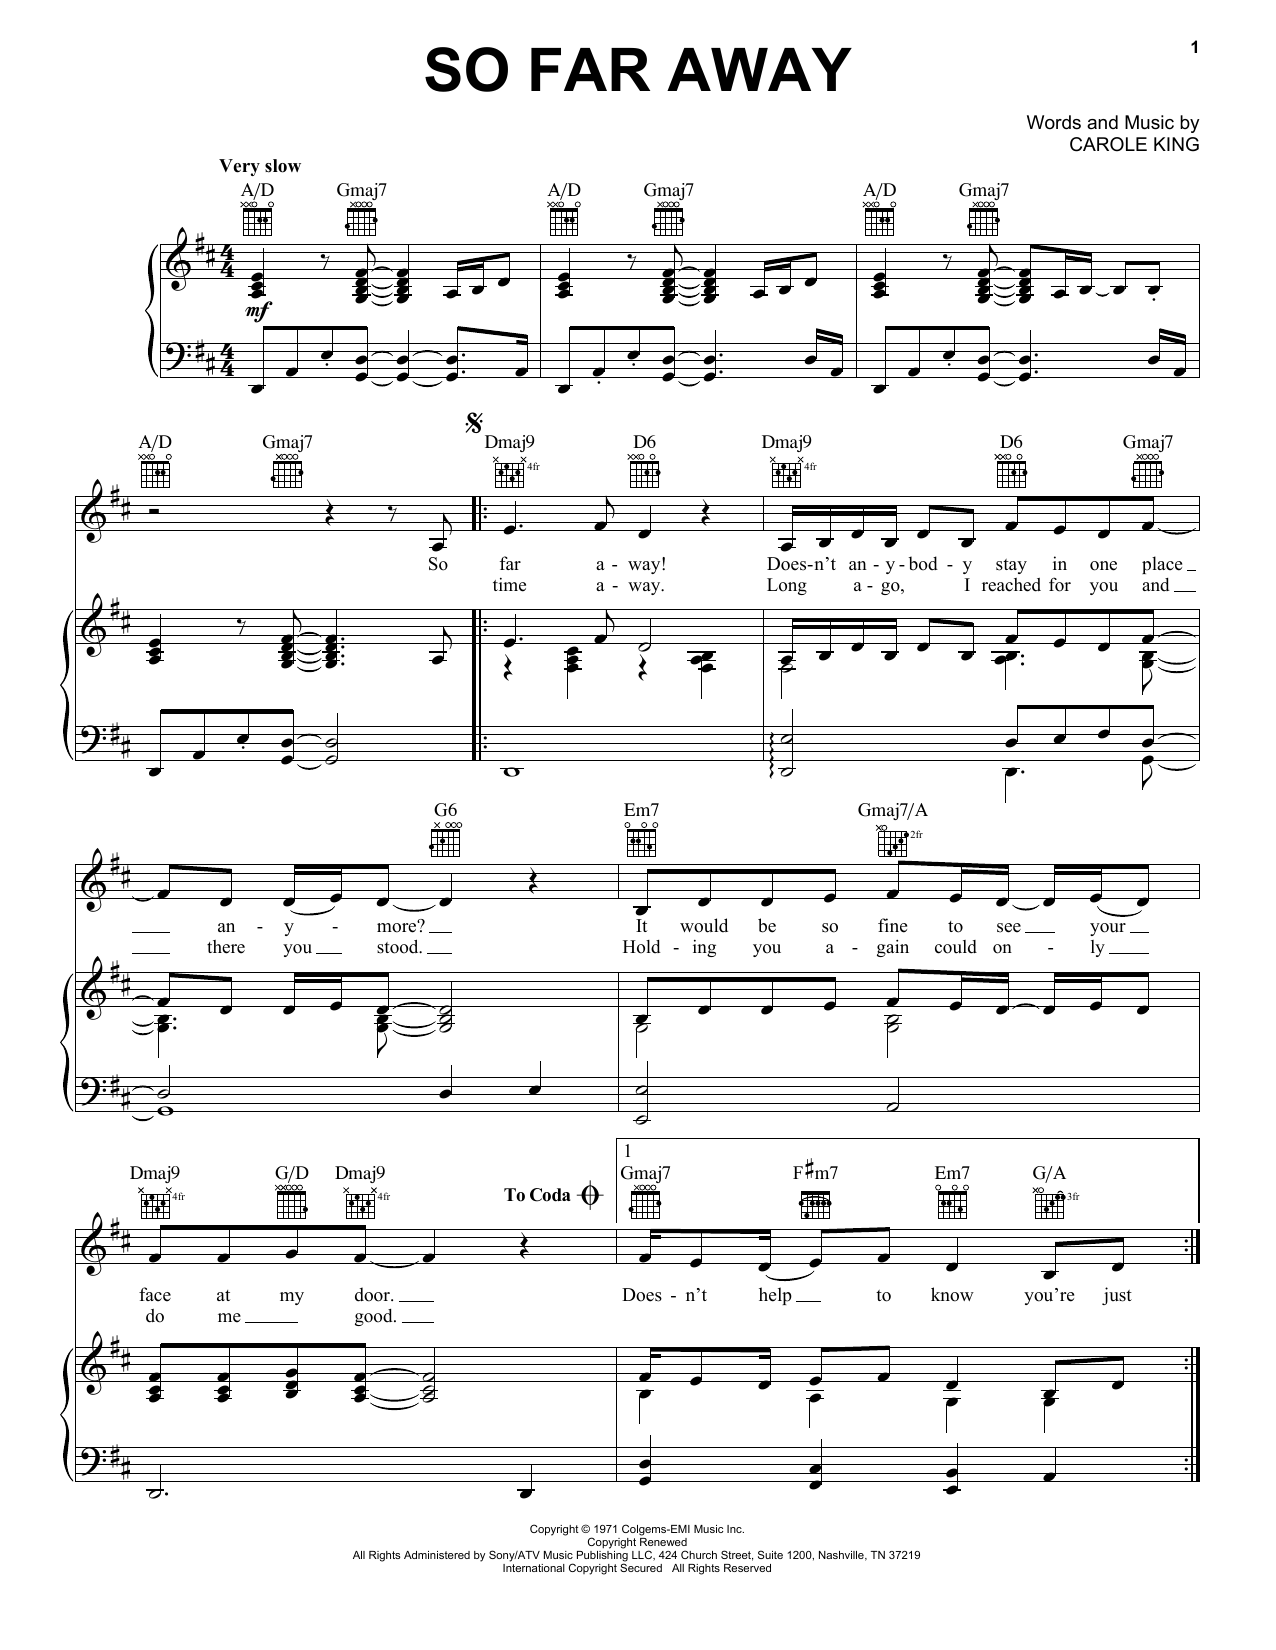 Carole King So Far Away sheet music notes and chords. Download Printable PDF.